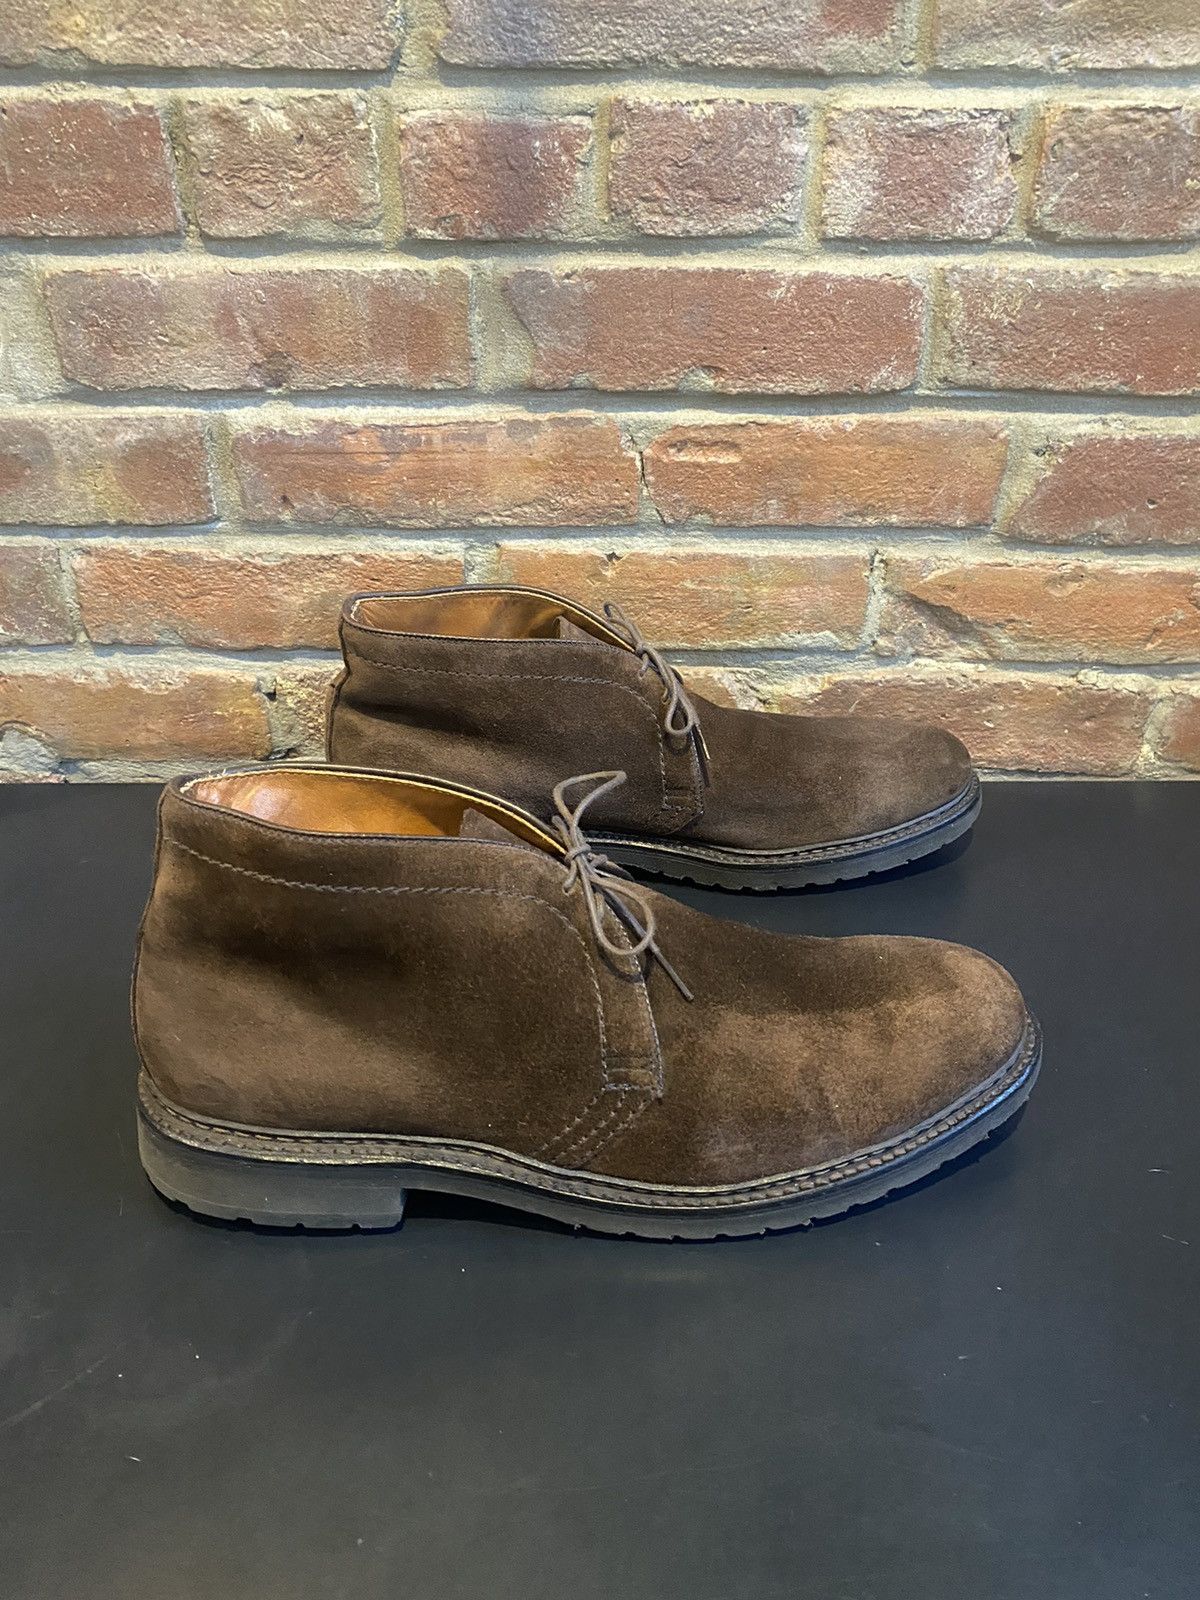 Alden Alden Chocolate Dark Brown Suede Chukka Boots on lug sole Size US 11.5 / EU 44-45 - 2 Preview